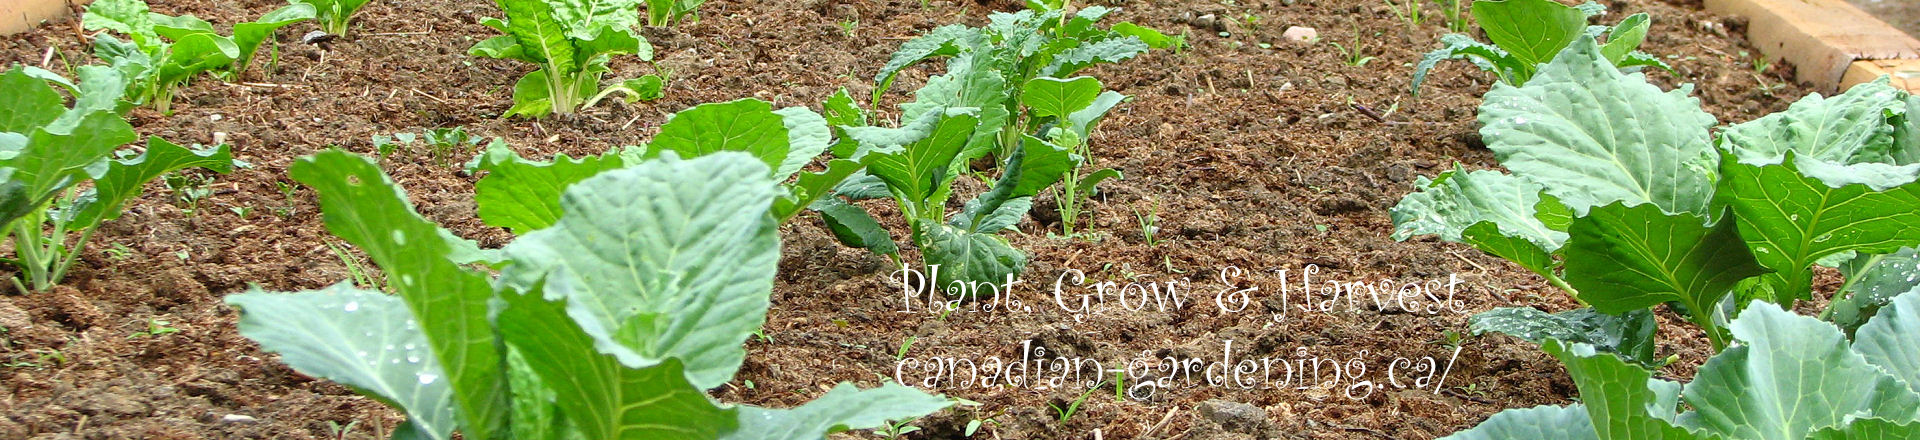 plant, grow, harvest 25 vegetables logo